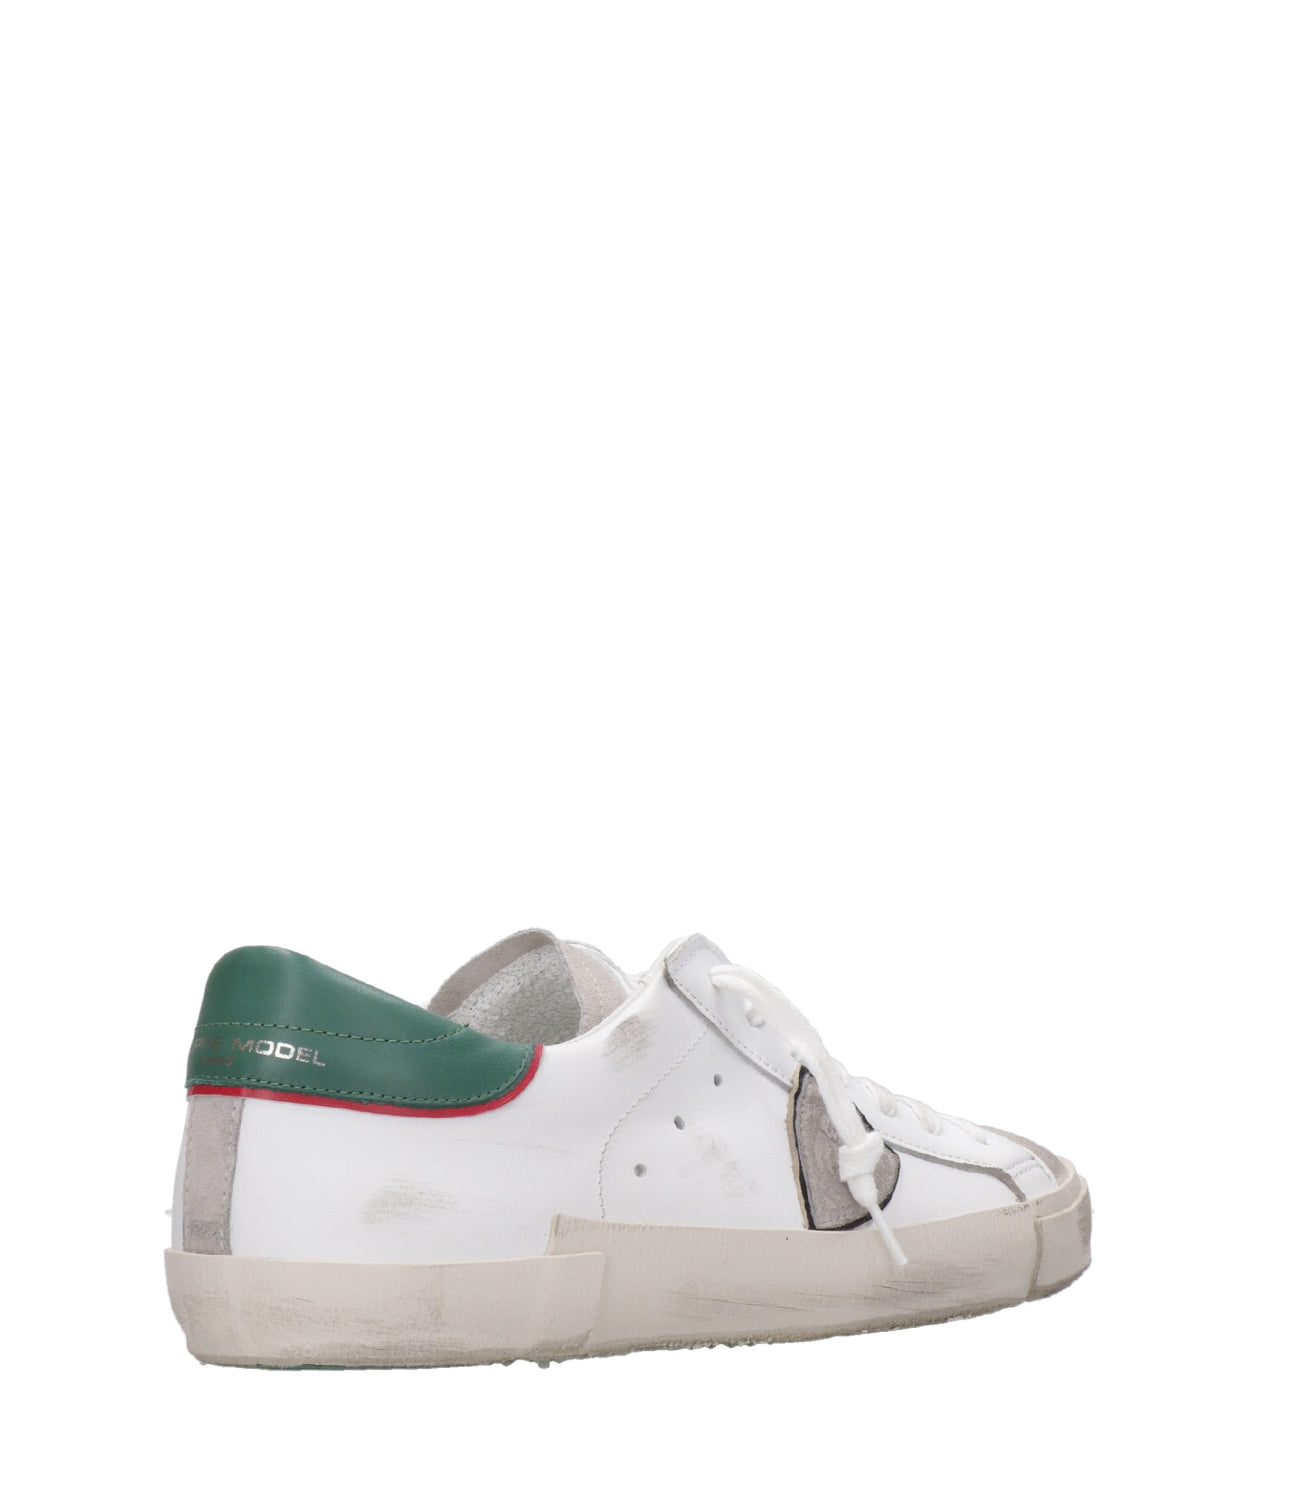 Philippe Model | Sneakers PRSX Low Bianco e Verde